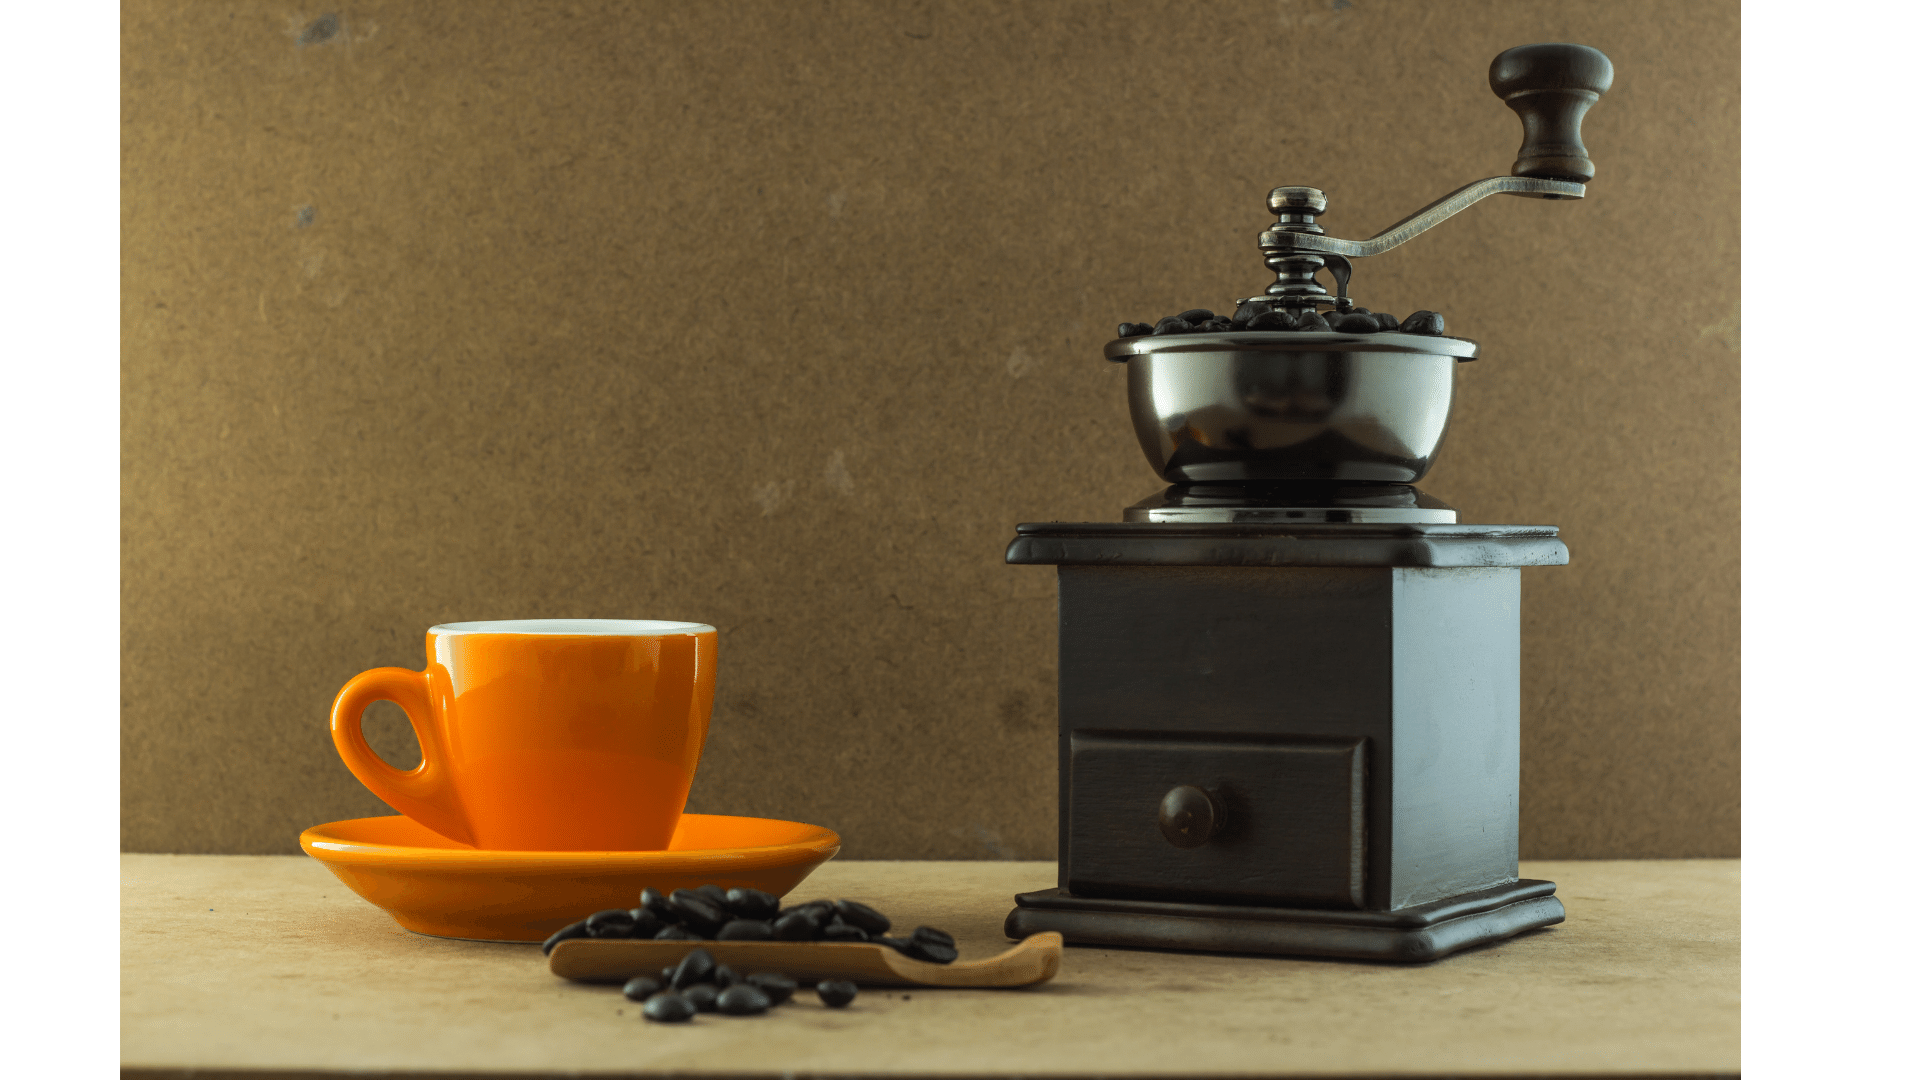 THE 5 BEST MANUAL COFFEE GRINDER 2022